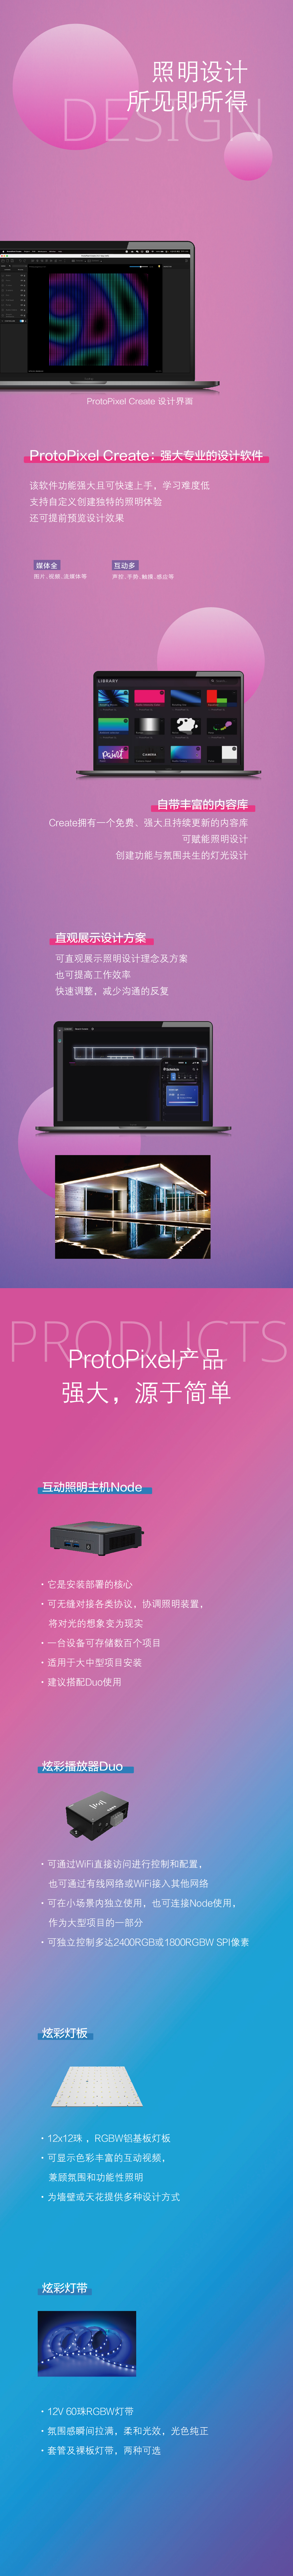 ProtoPixel-02yasuo.jpg